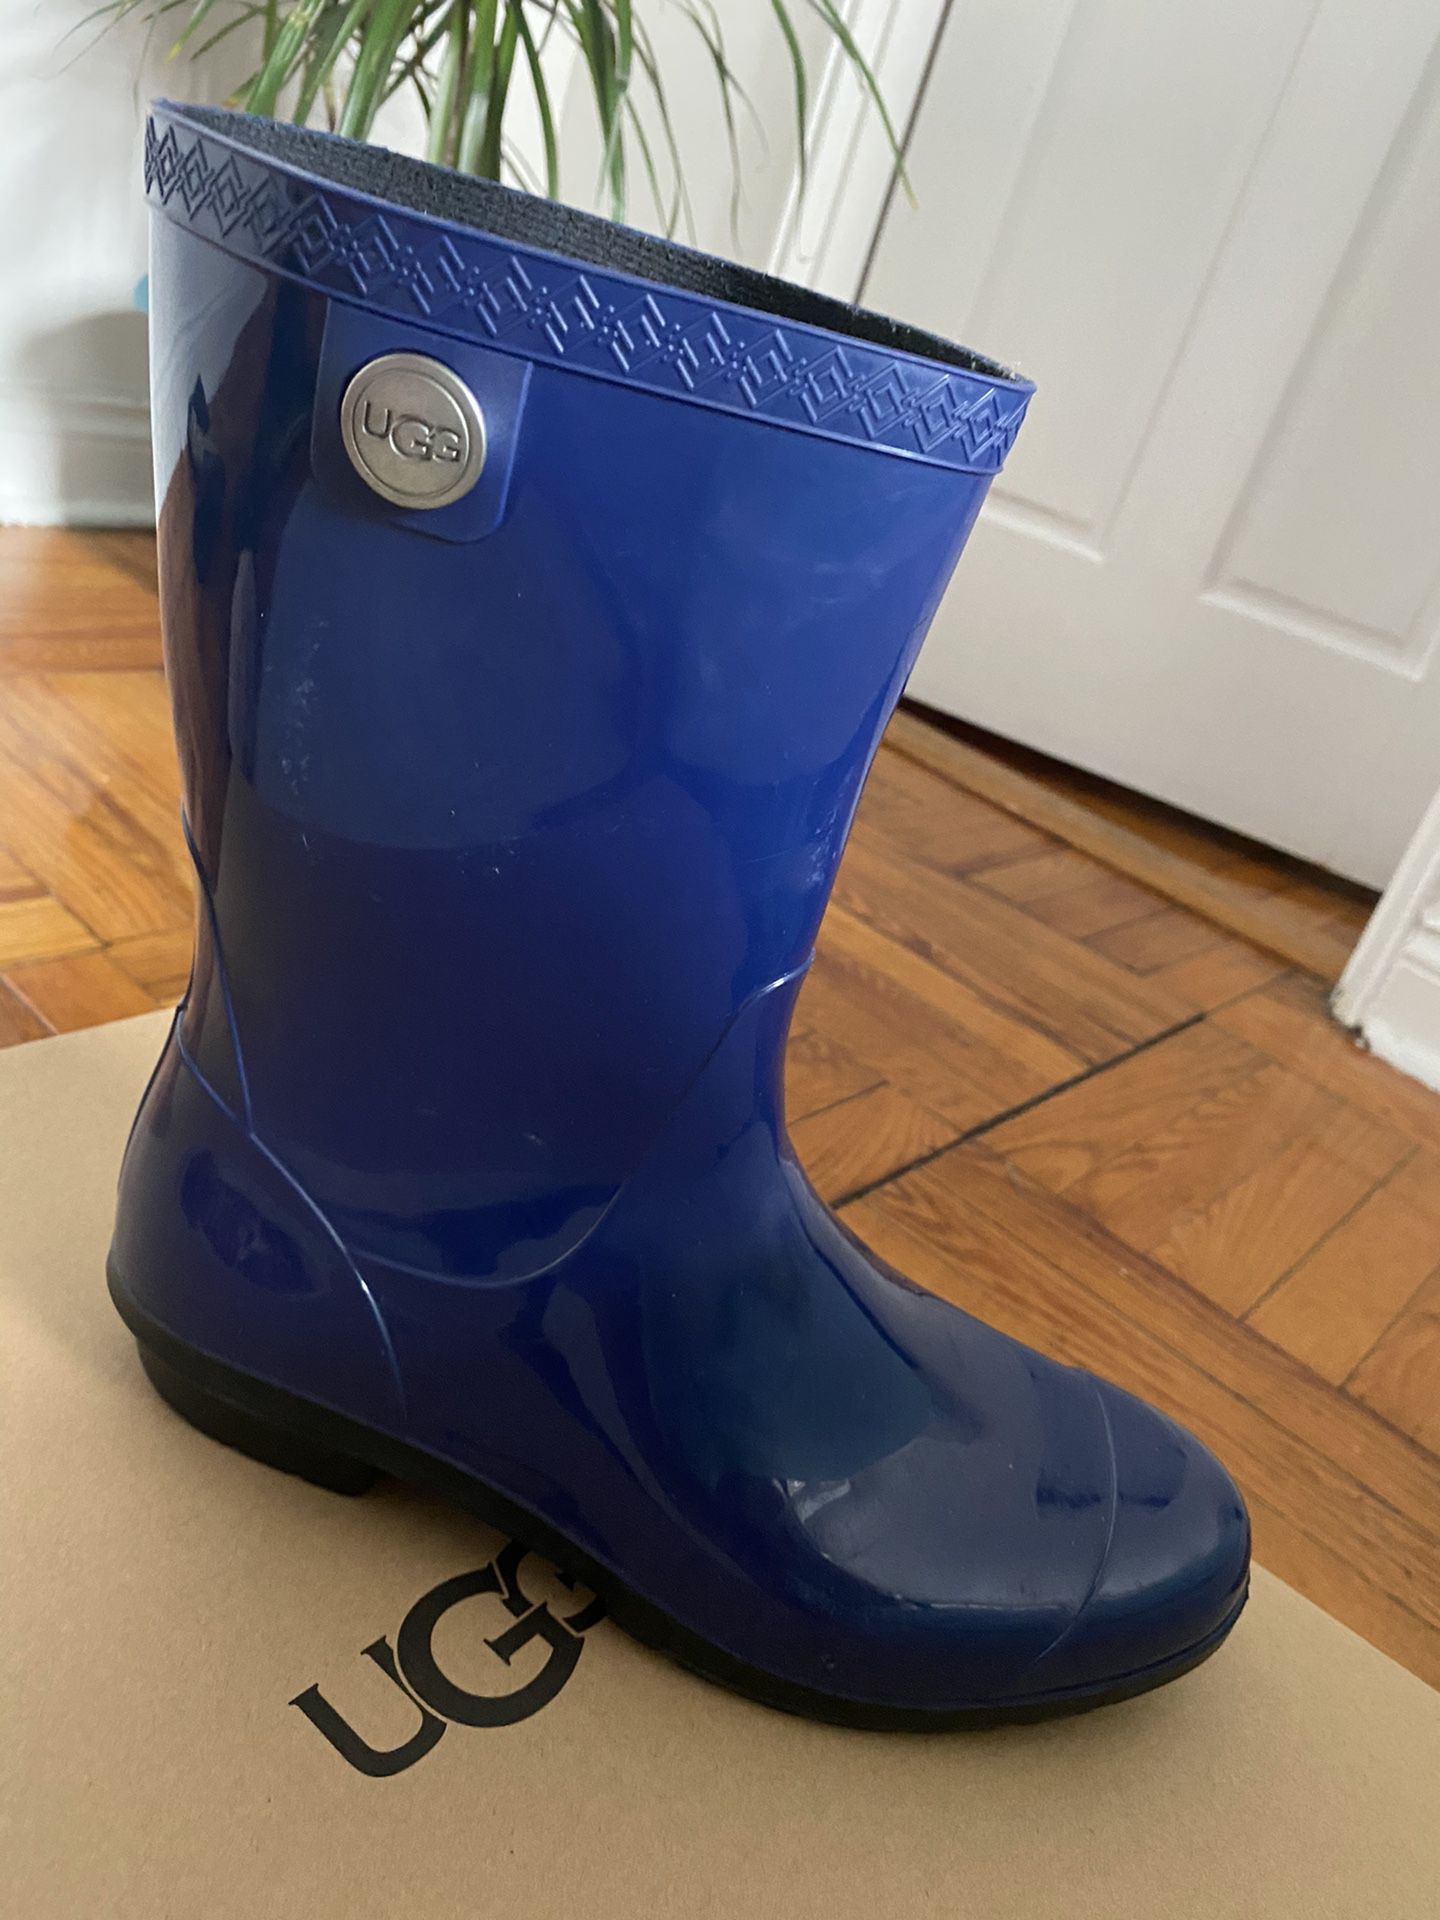 UGG rain boots women’s size 11